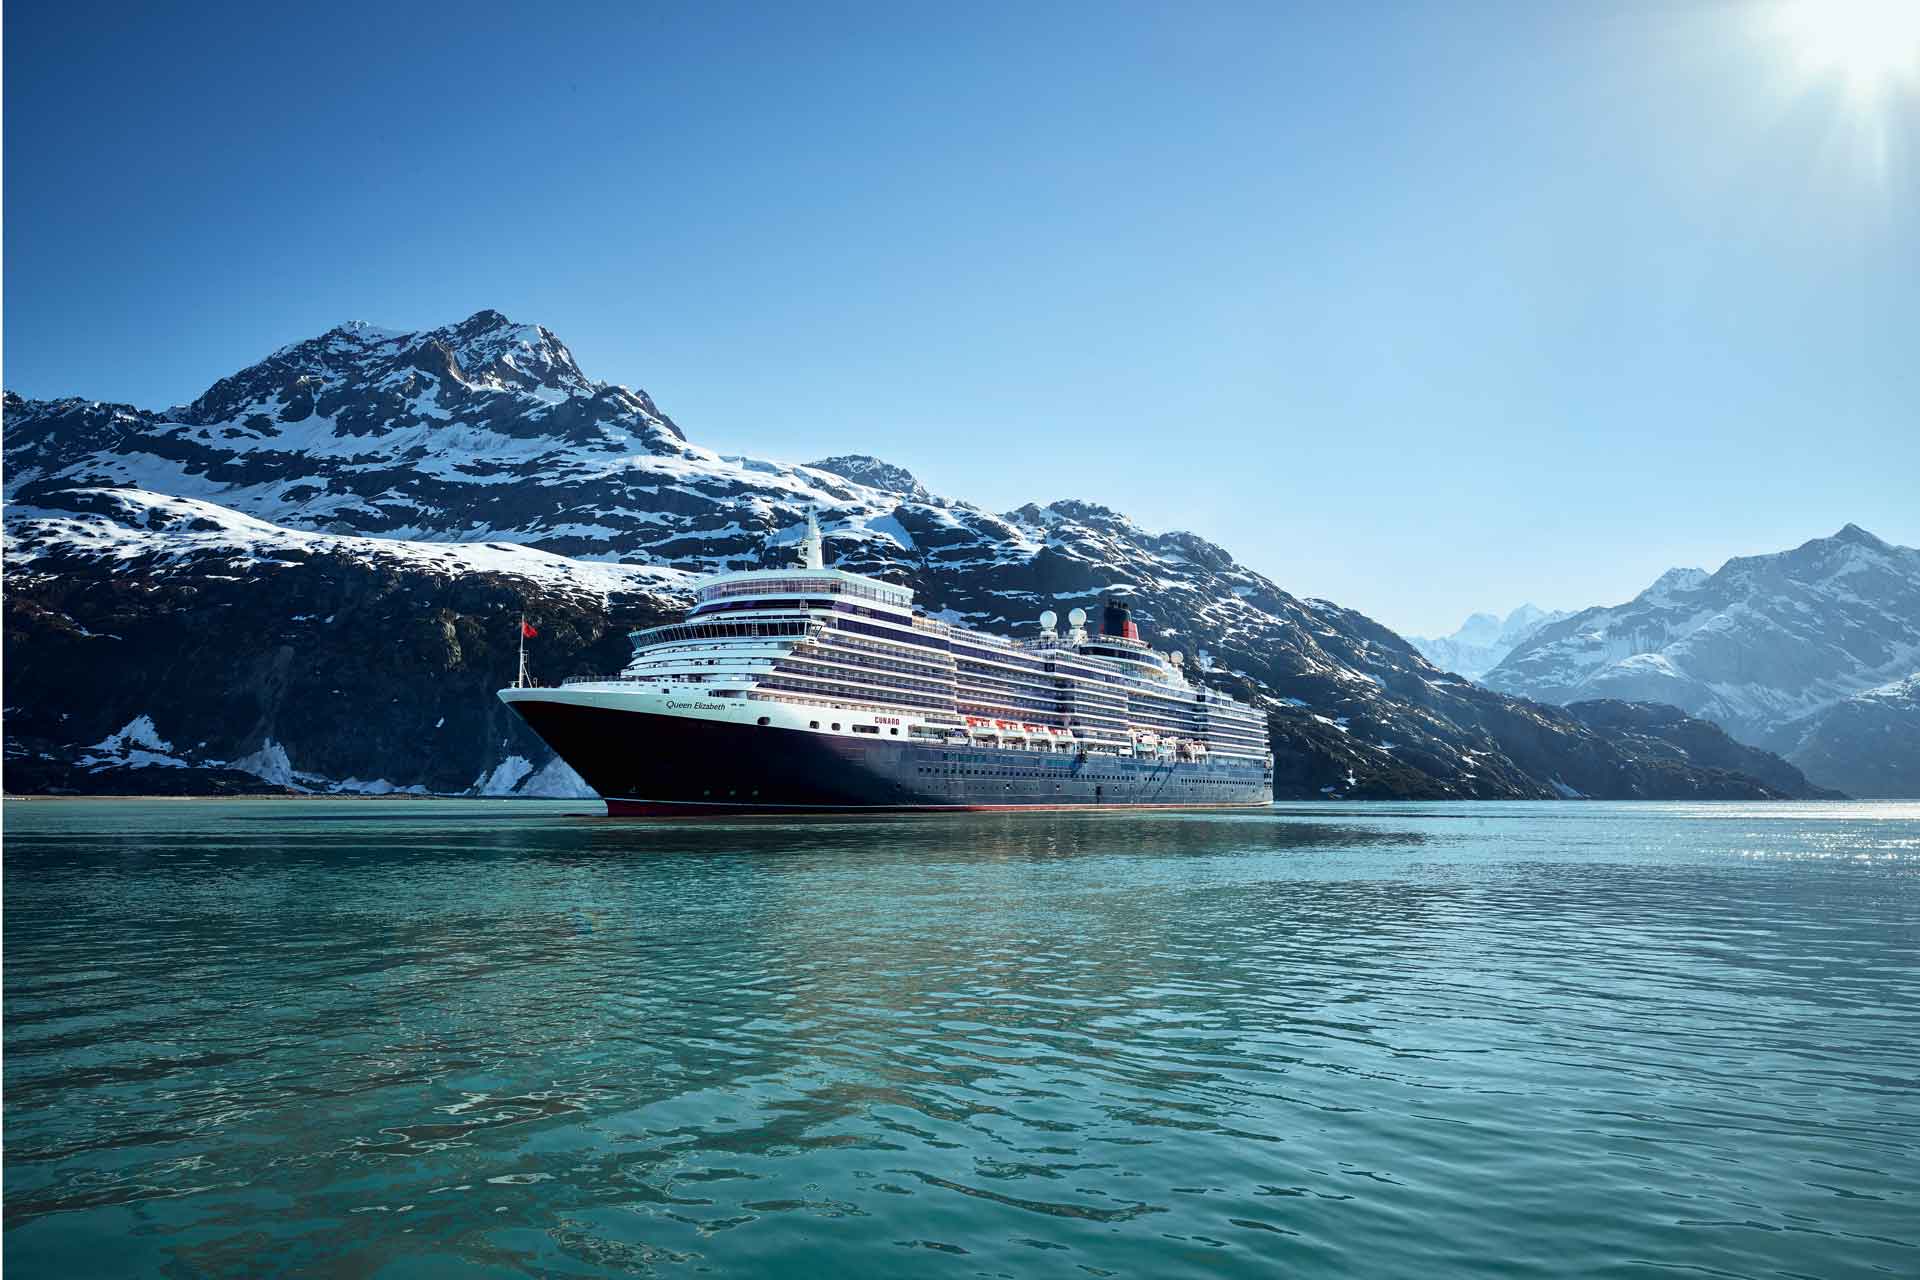 Legendary Cruise Line Cunard Has Added Another Ship To Its Fleet